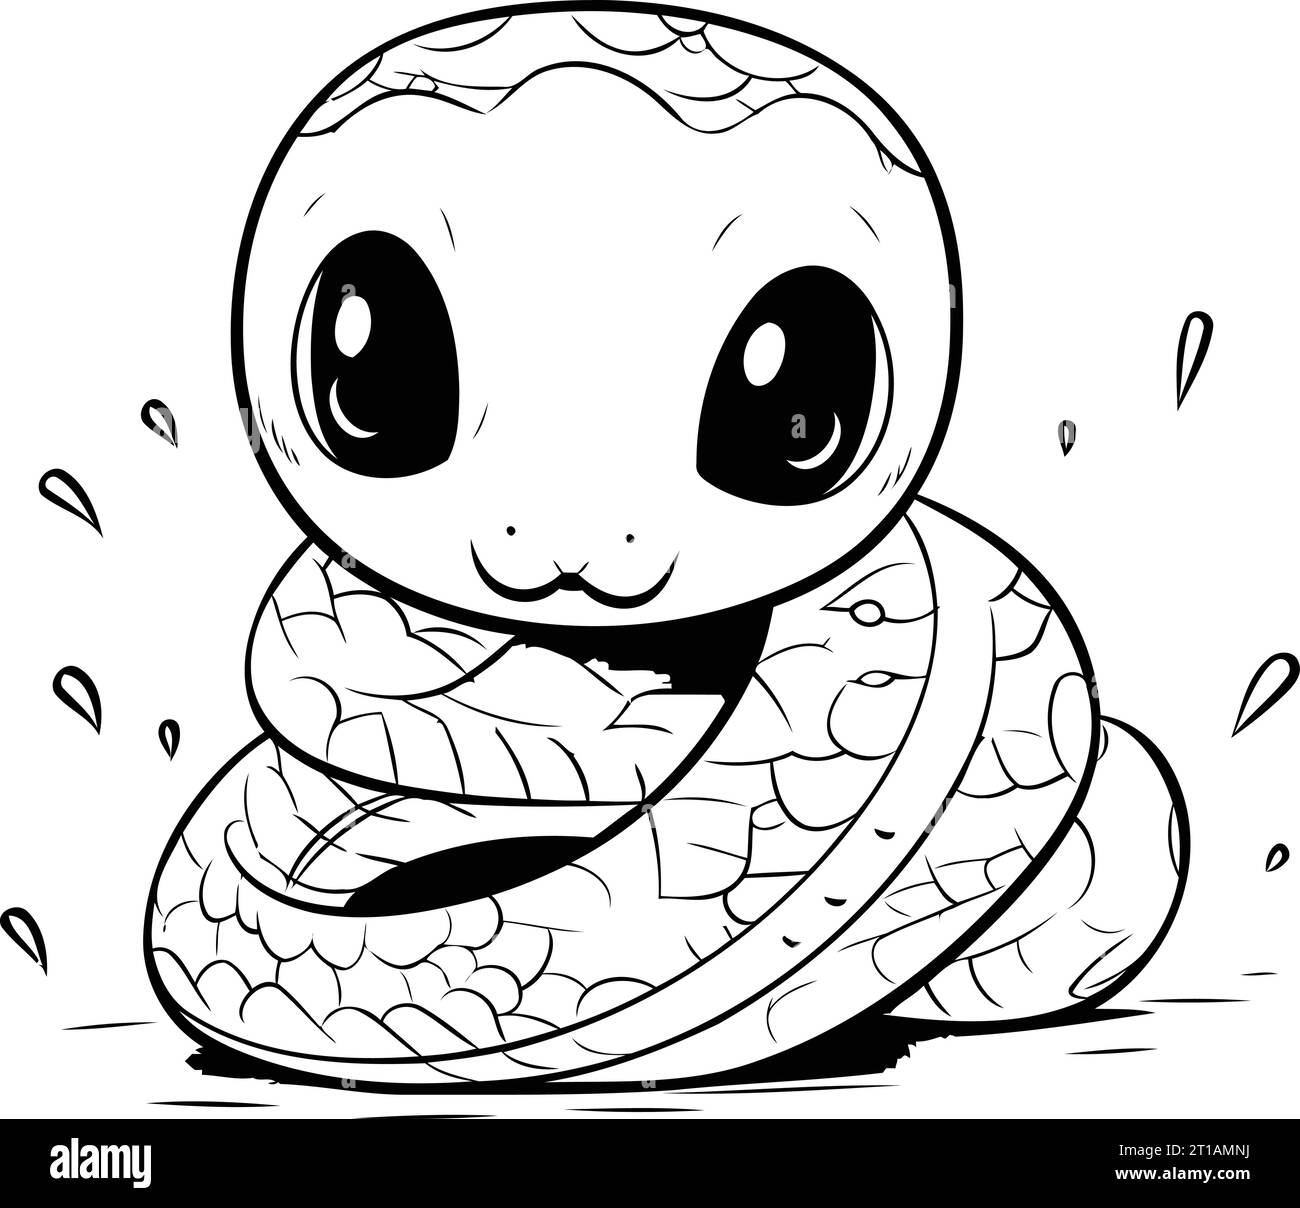 Cute cartoon snake. Vector illustration for children s coloring book. Stock Vector